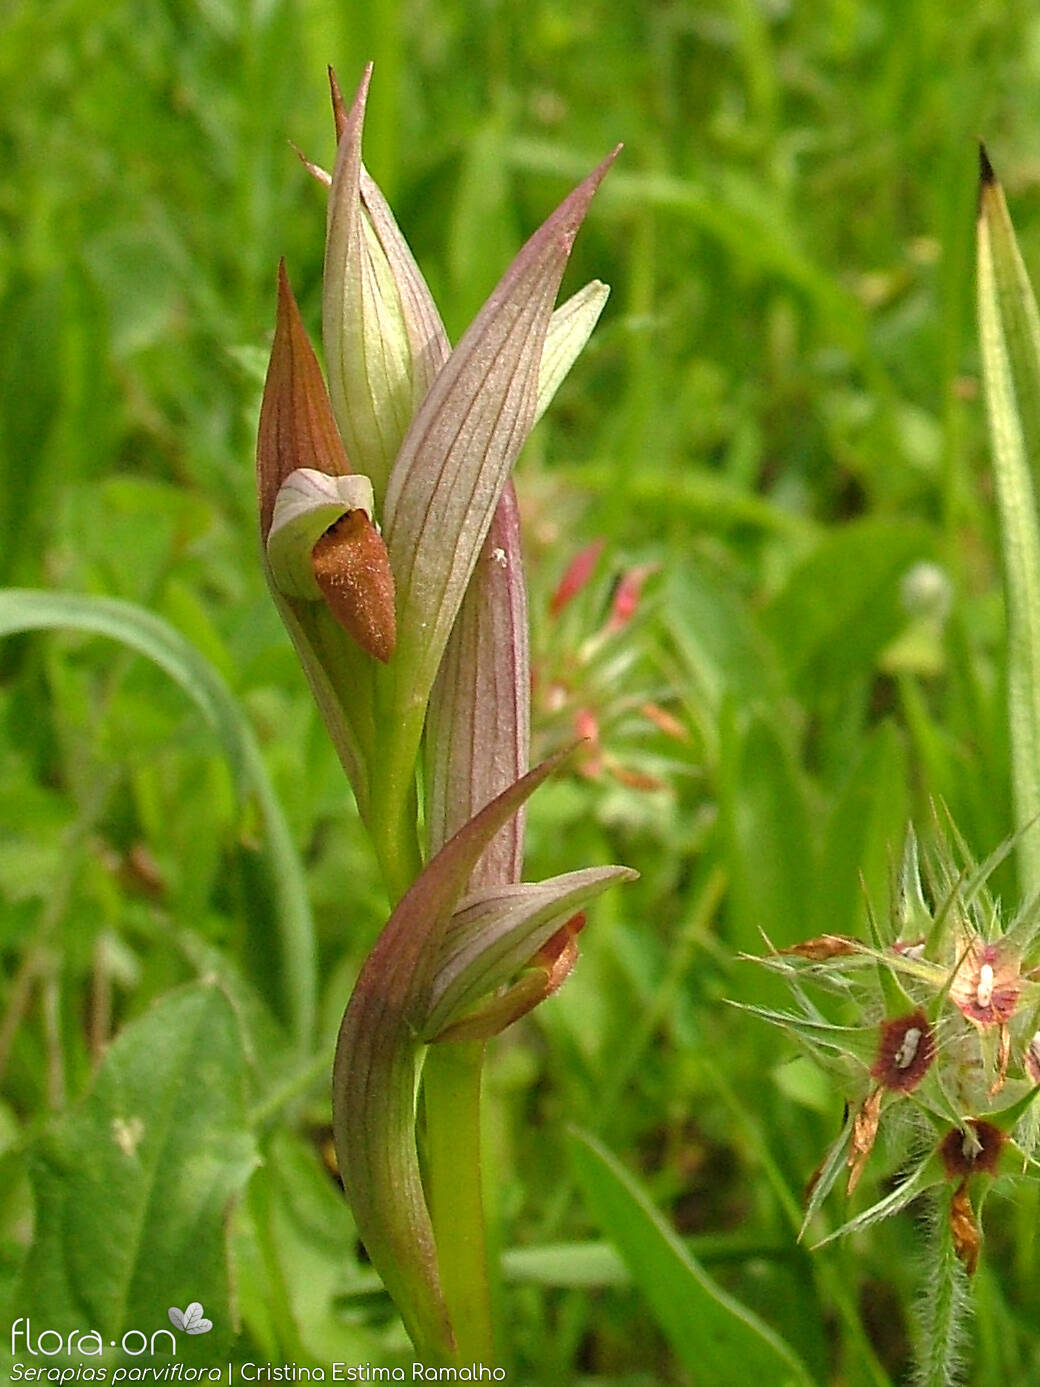 Serapias parviflora - Flor (geral) | Cristina Estima Ramalho; CC BY-NC 4.0